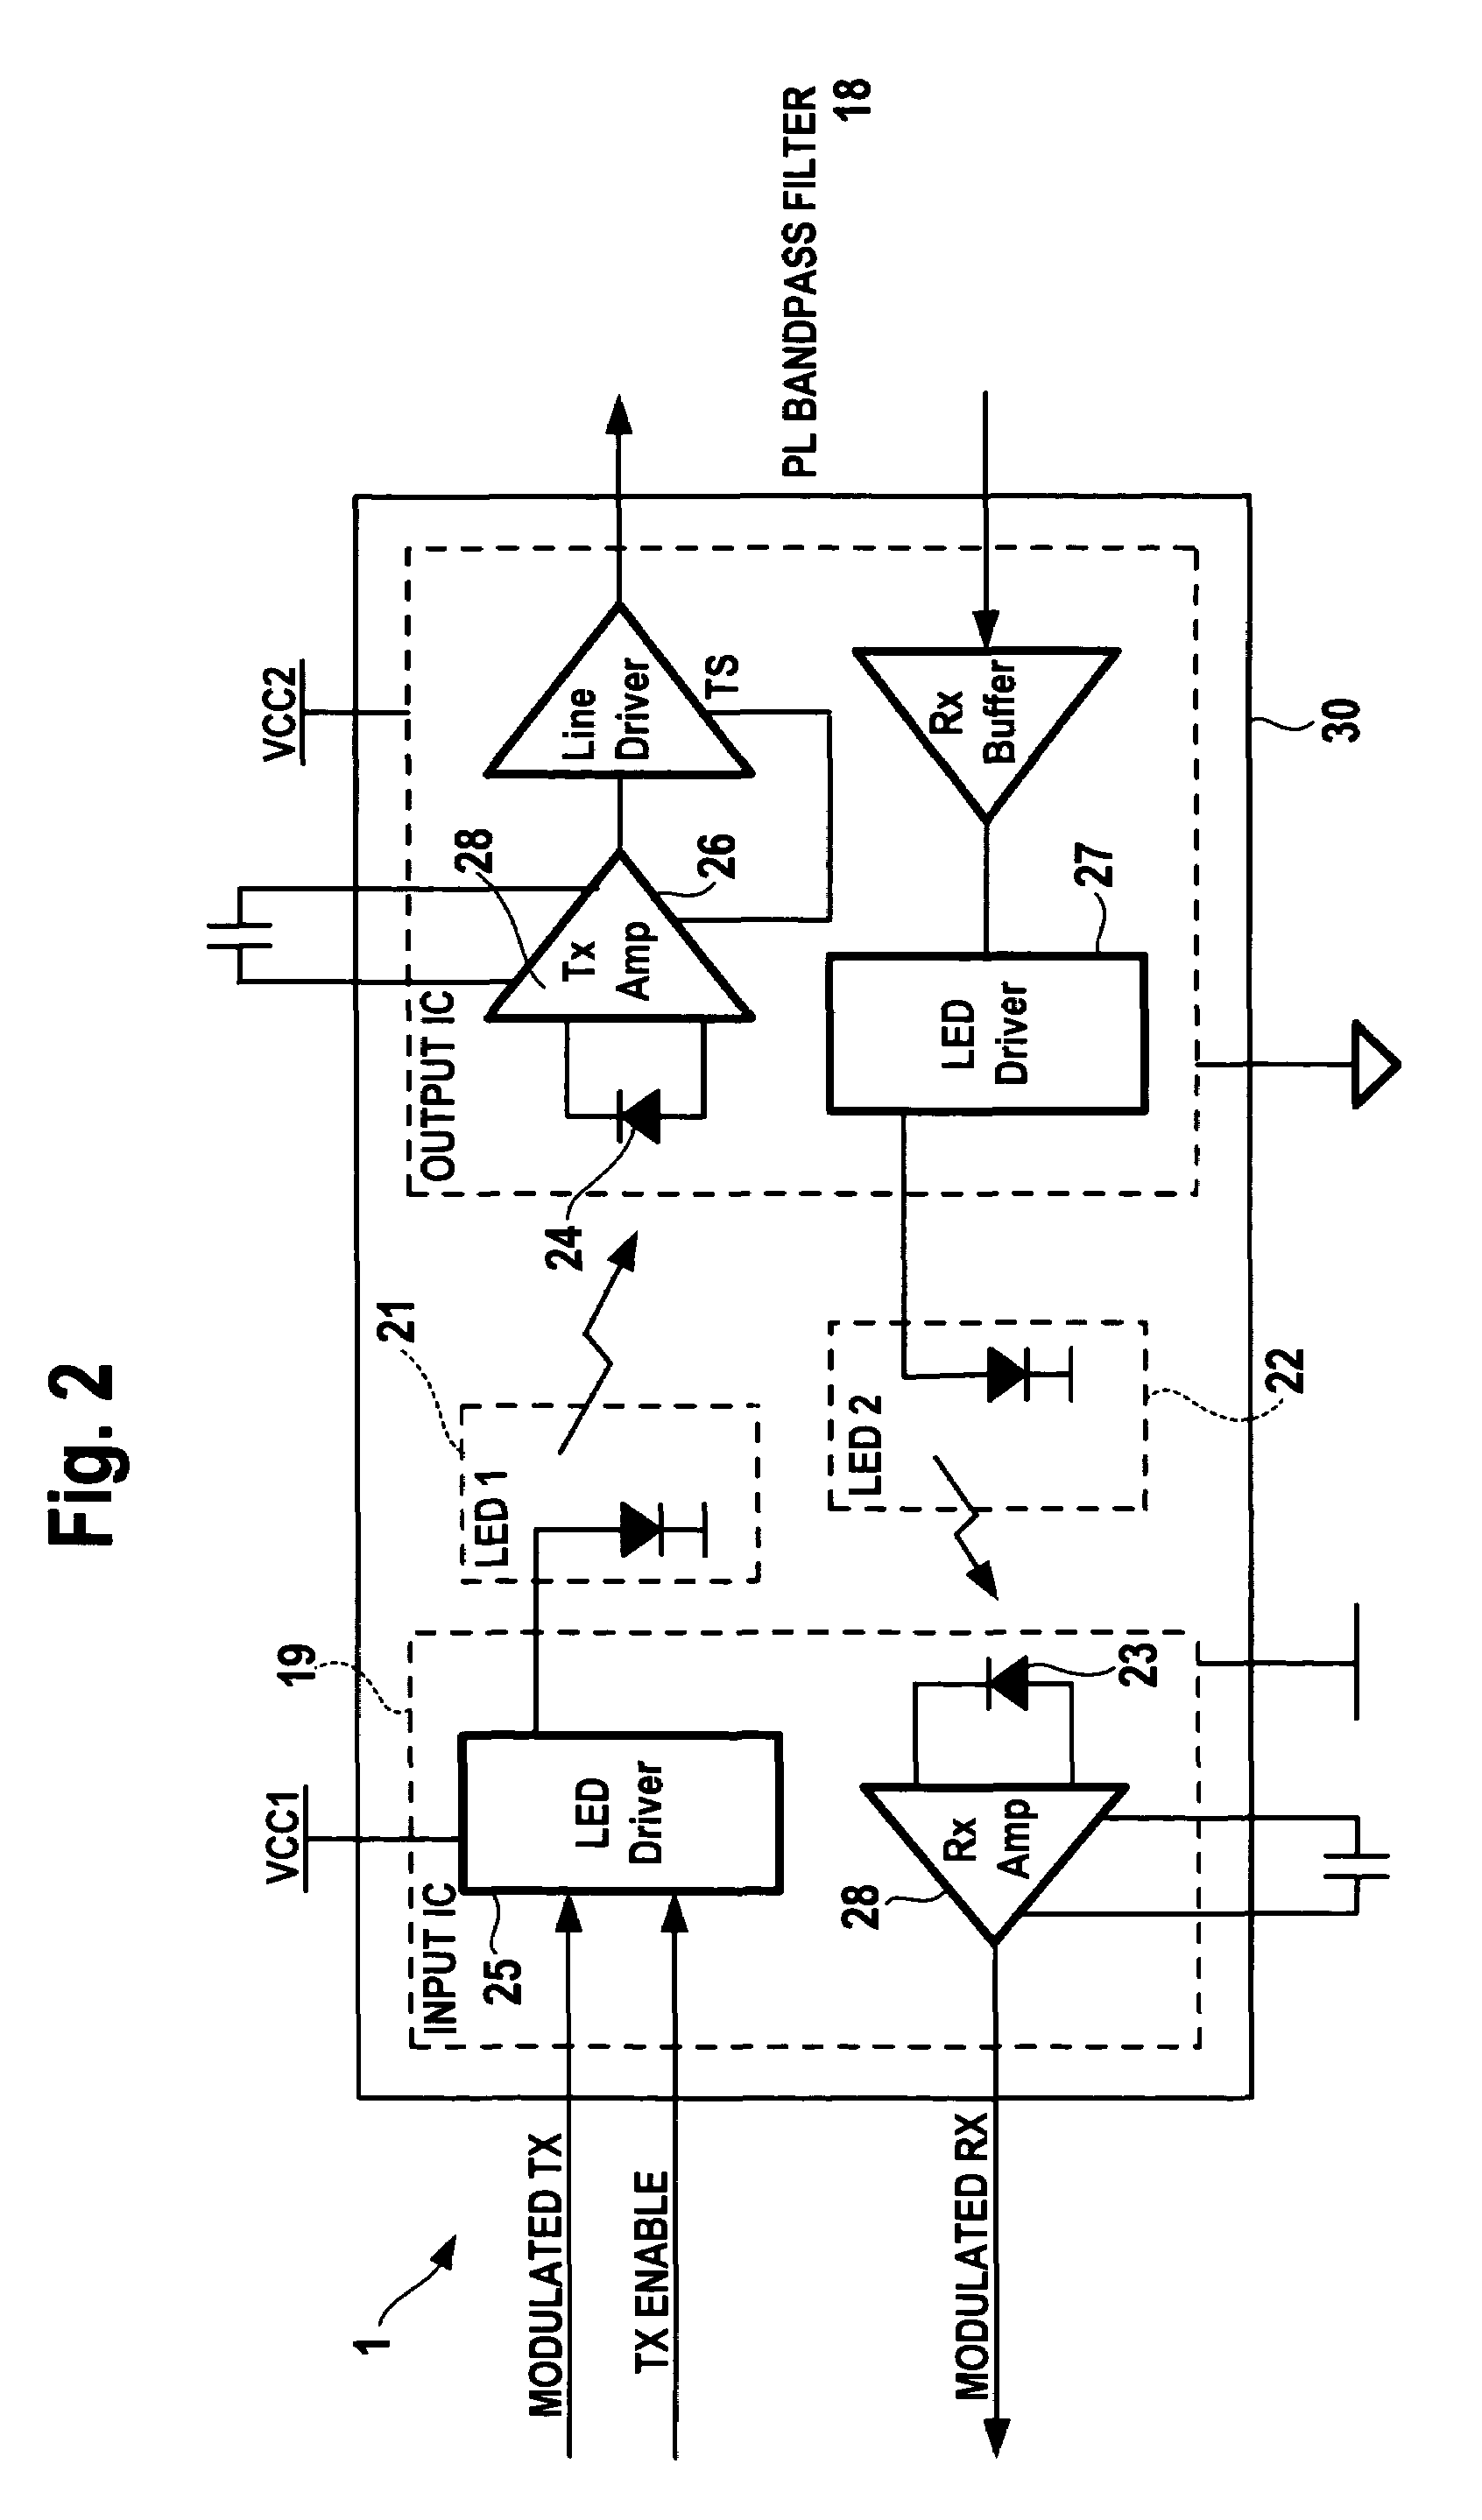 Coupling circuit arrangement for data communication over power lines